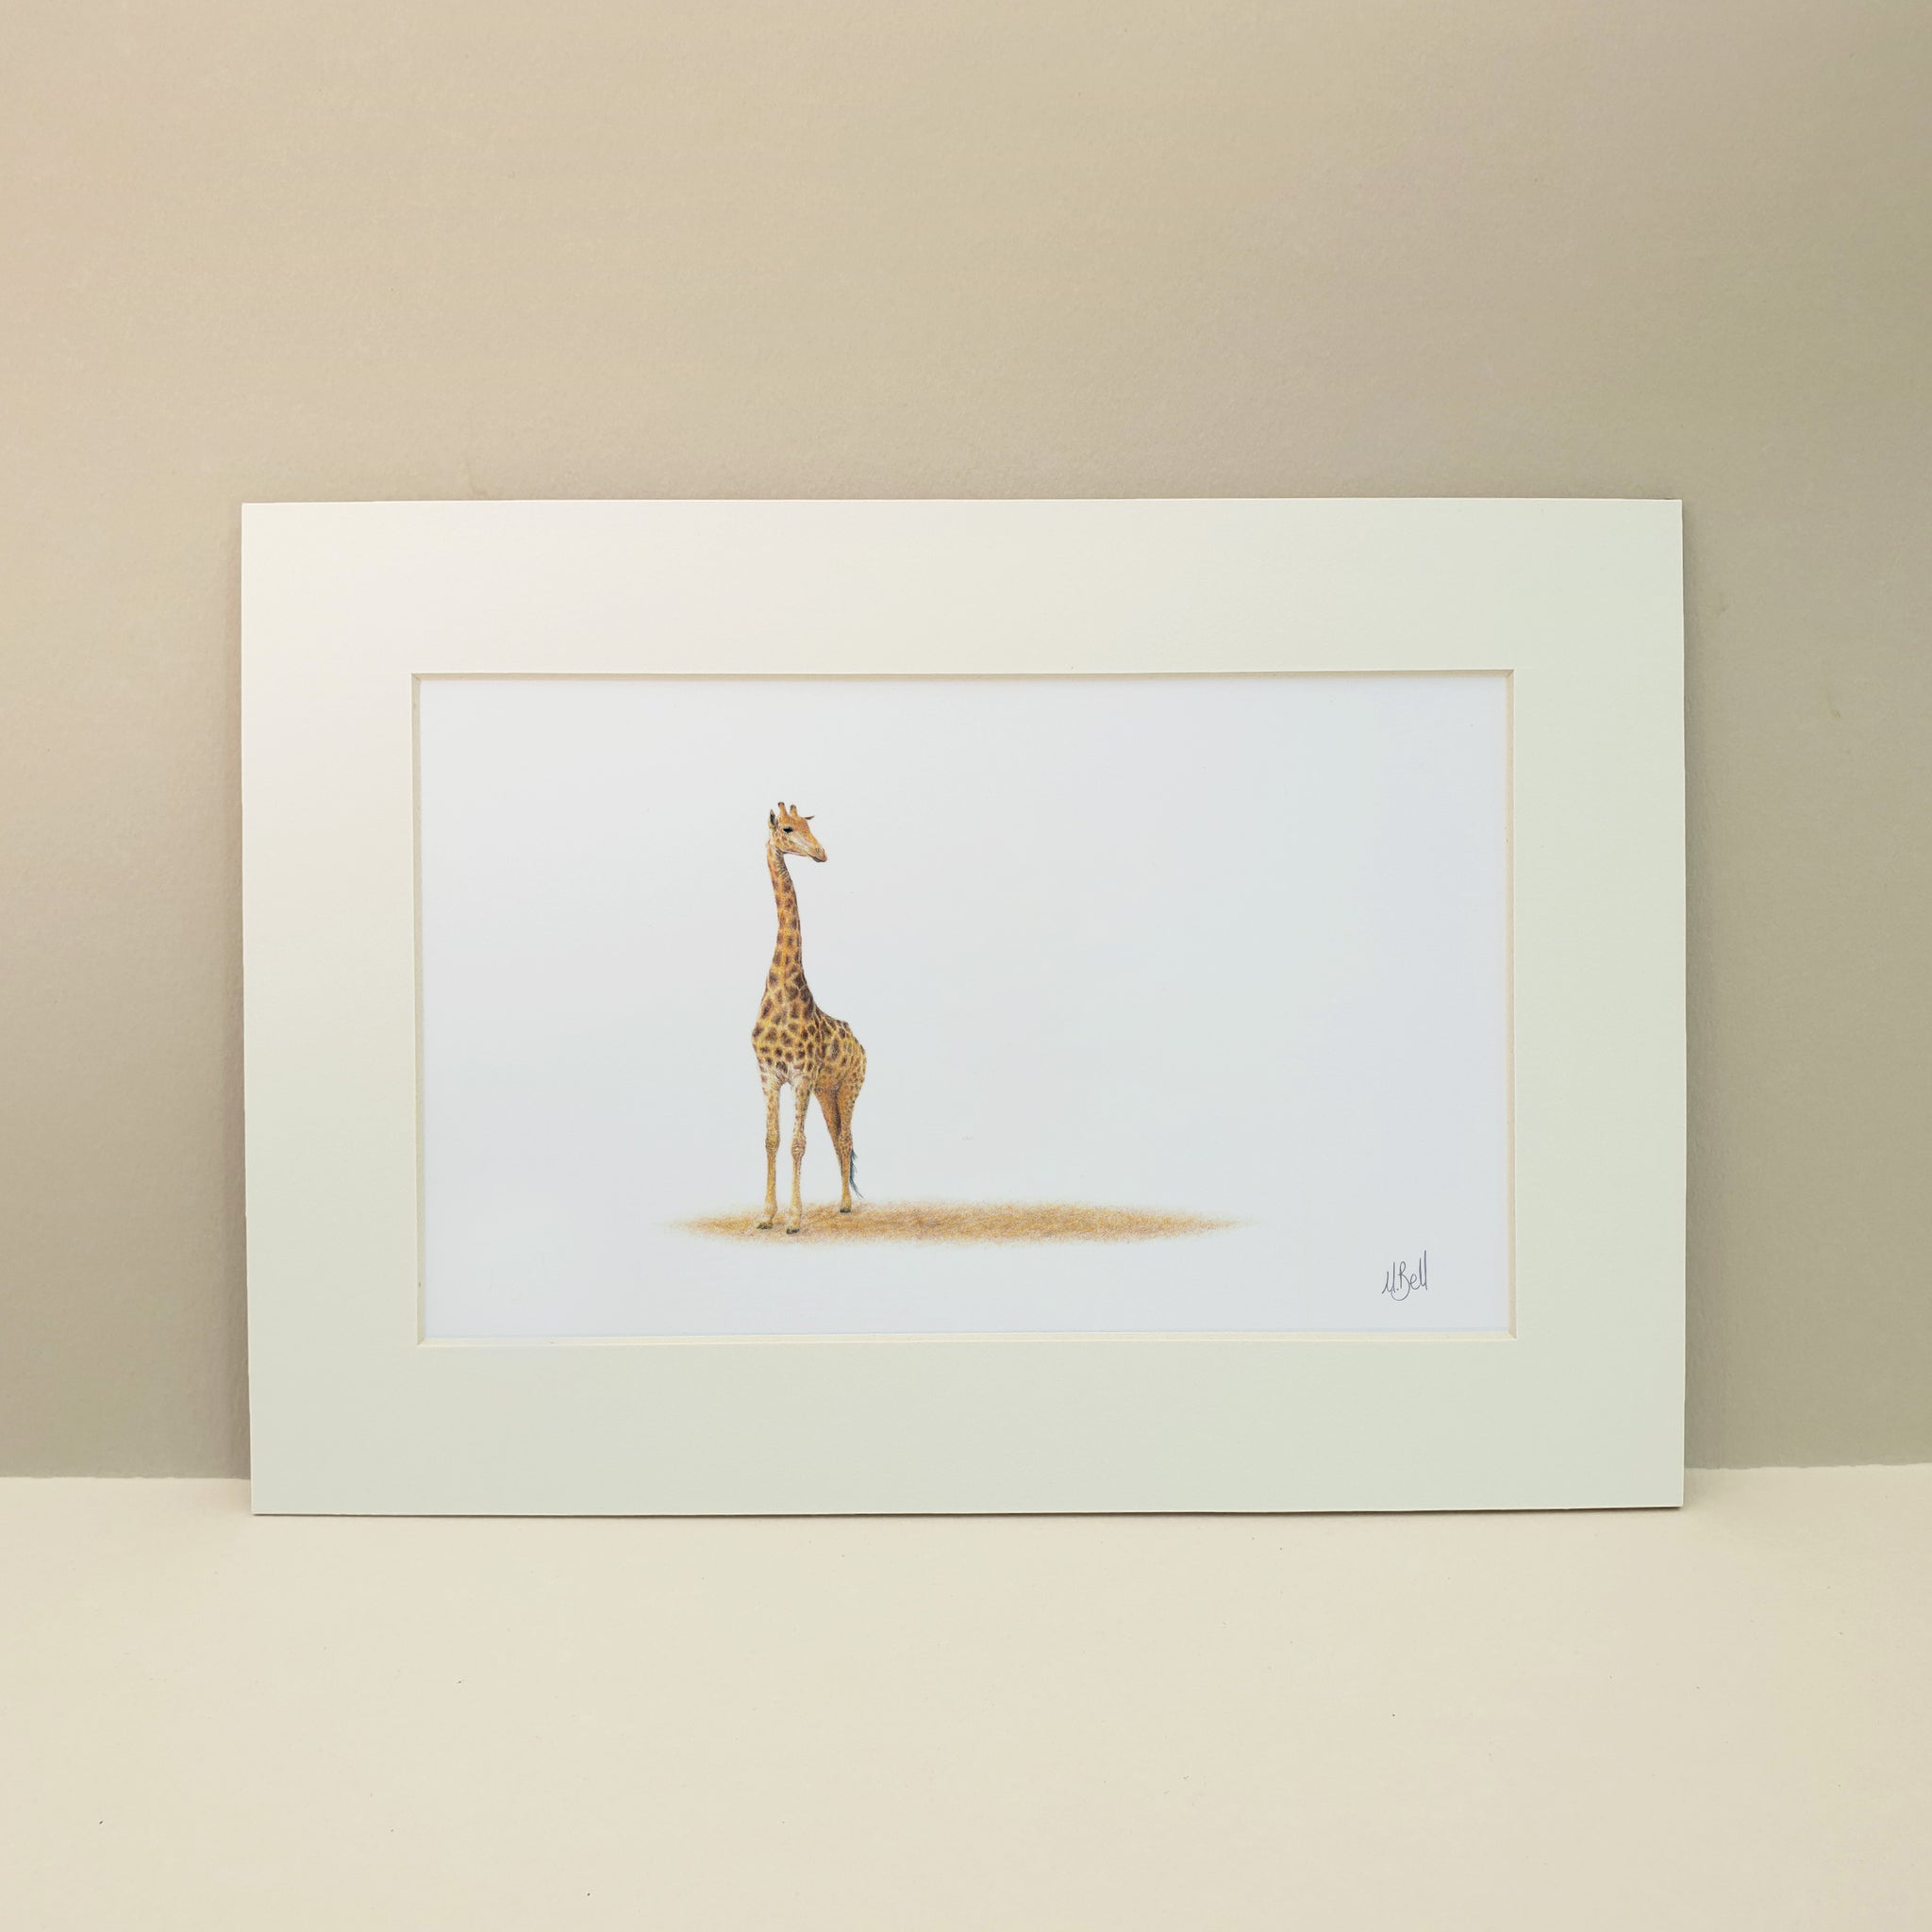 Giraffe artwork in pencil